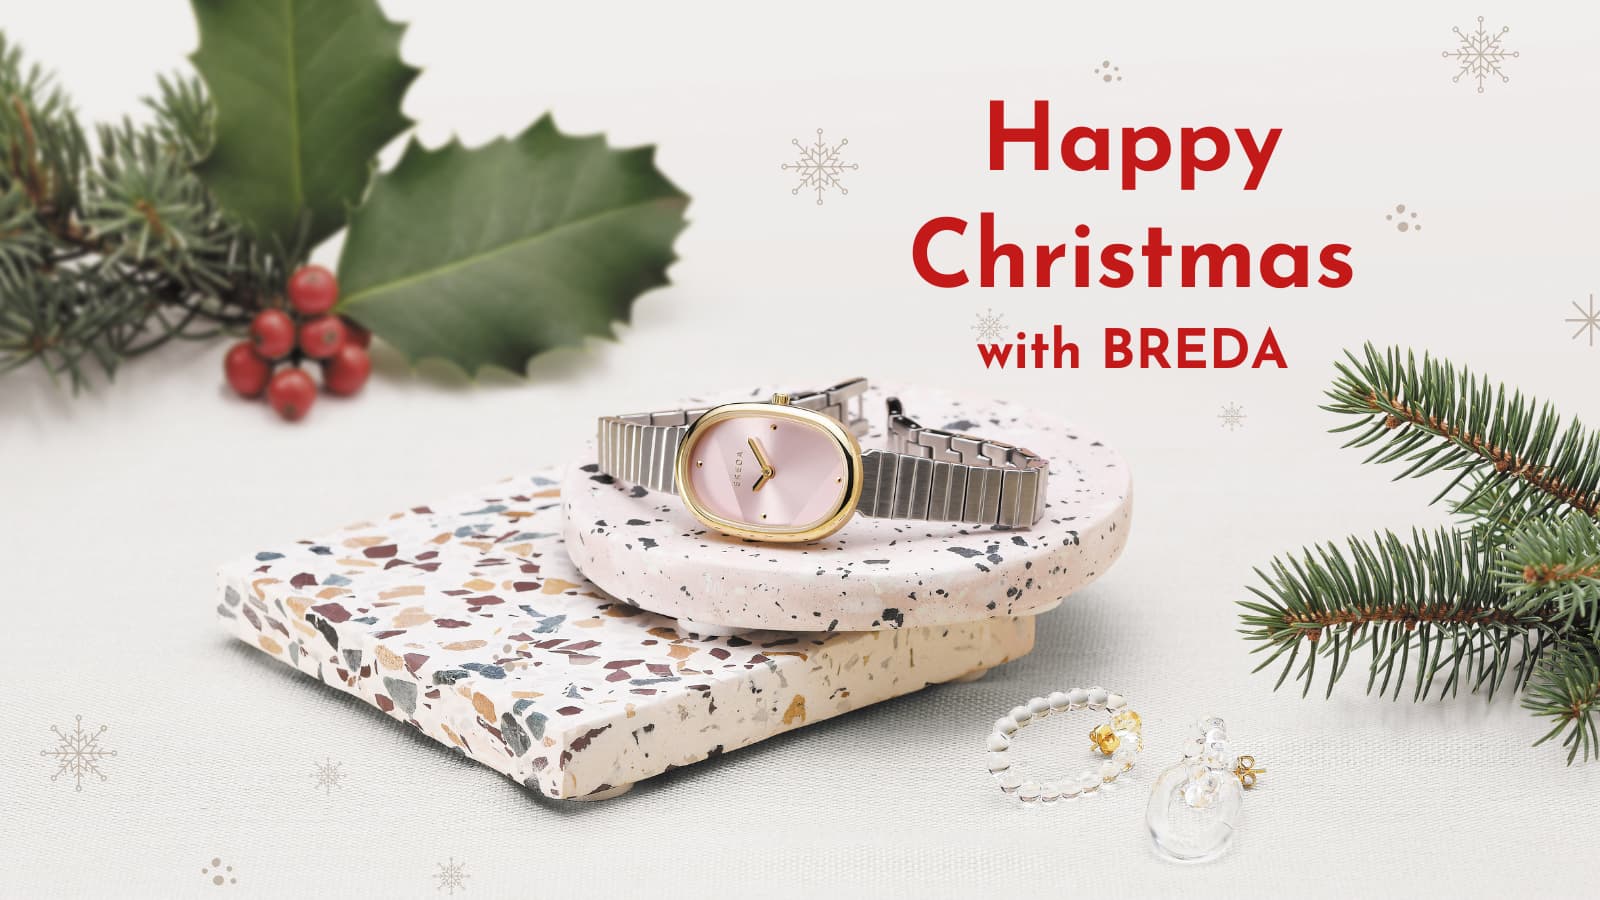 Happy Christmas 2021 with BREDA